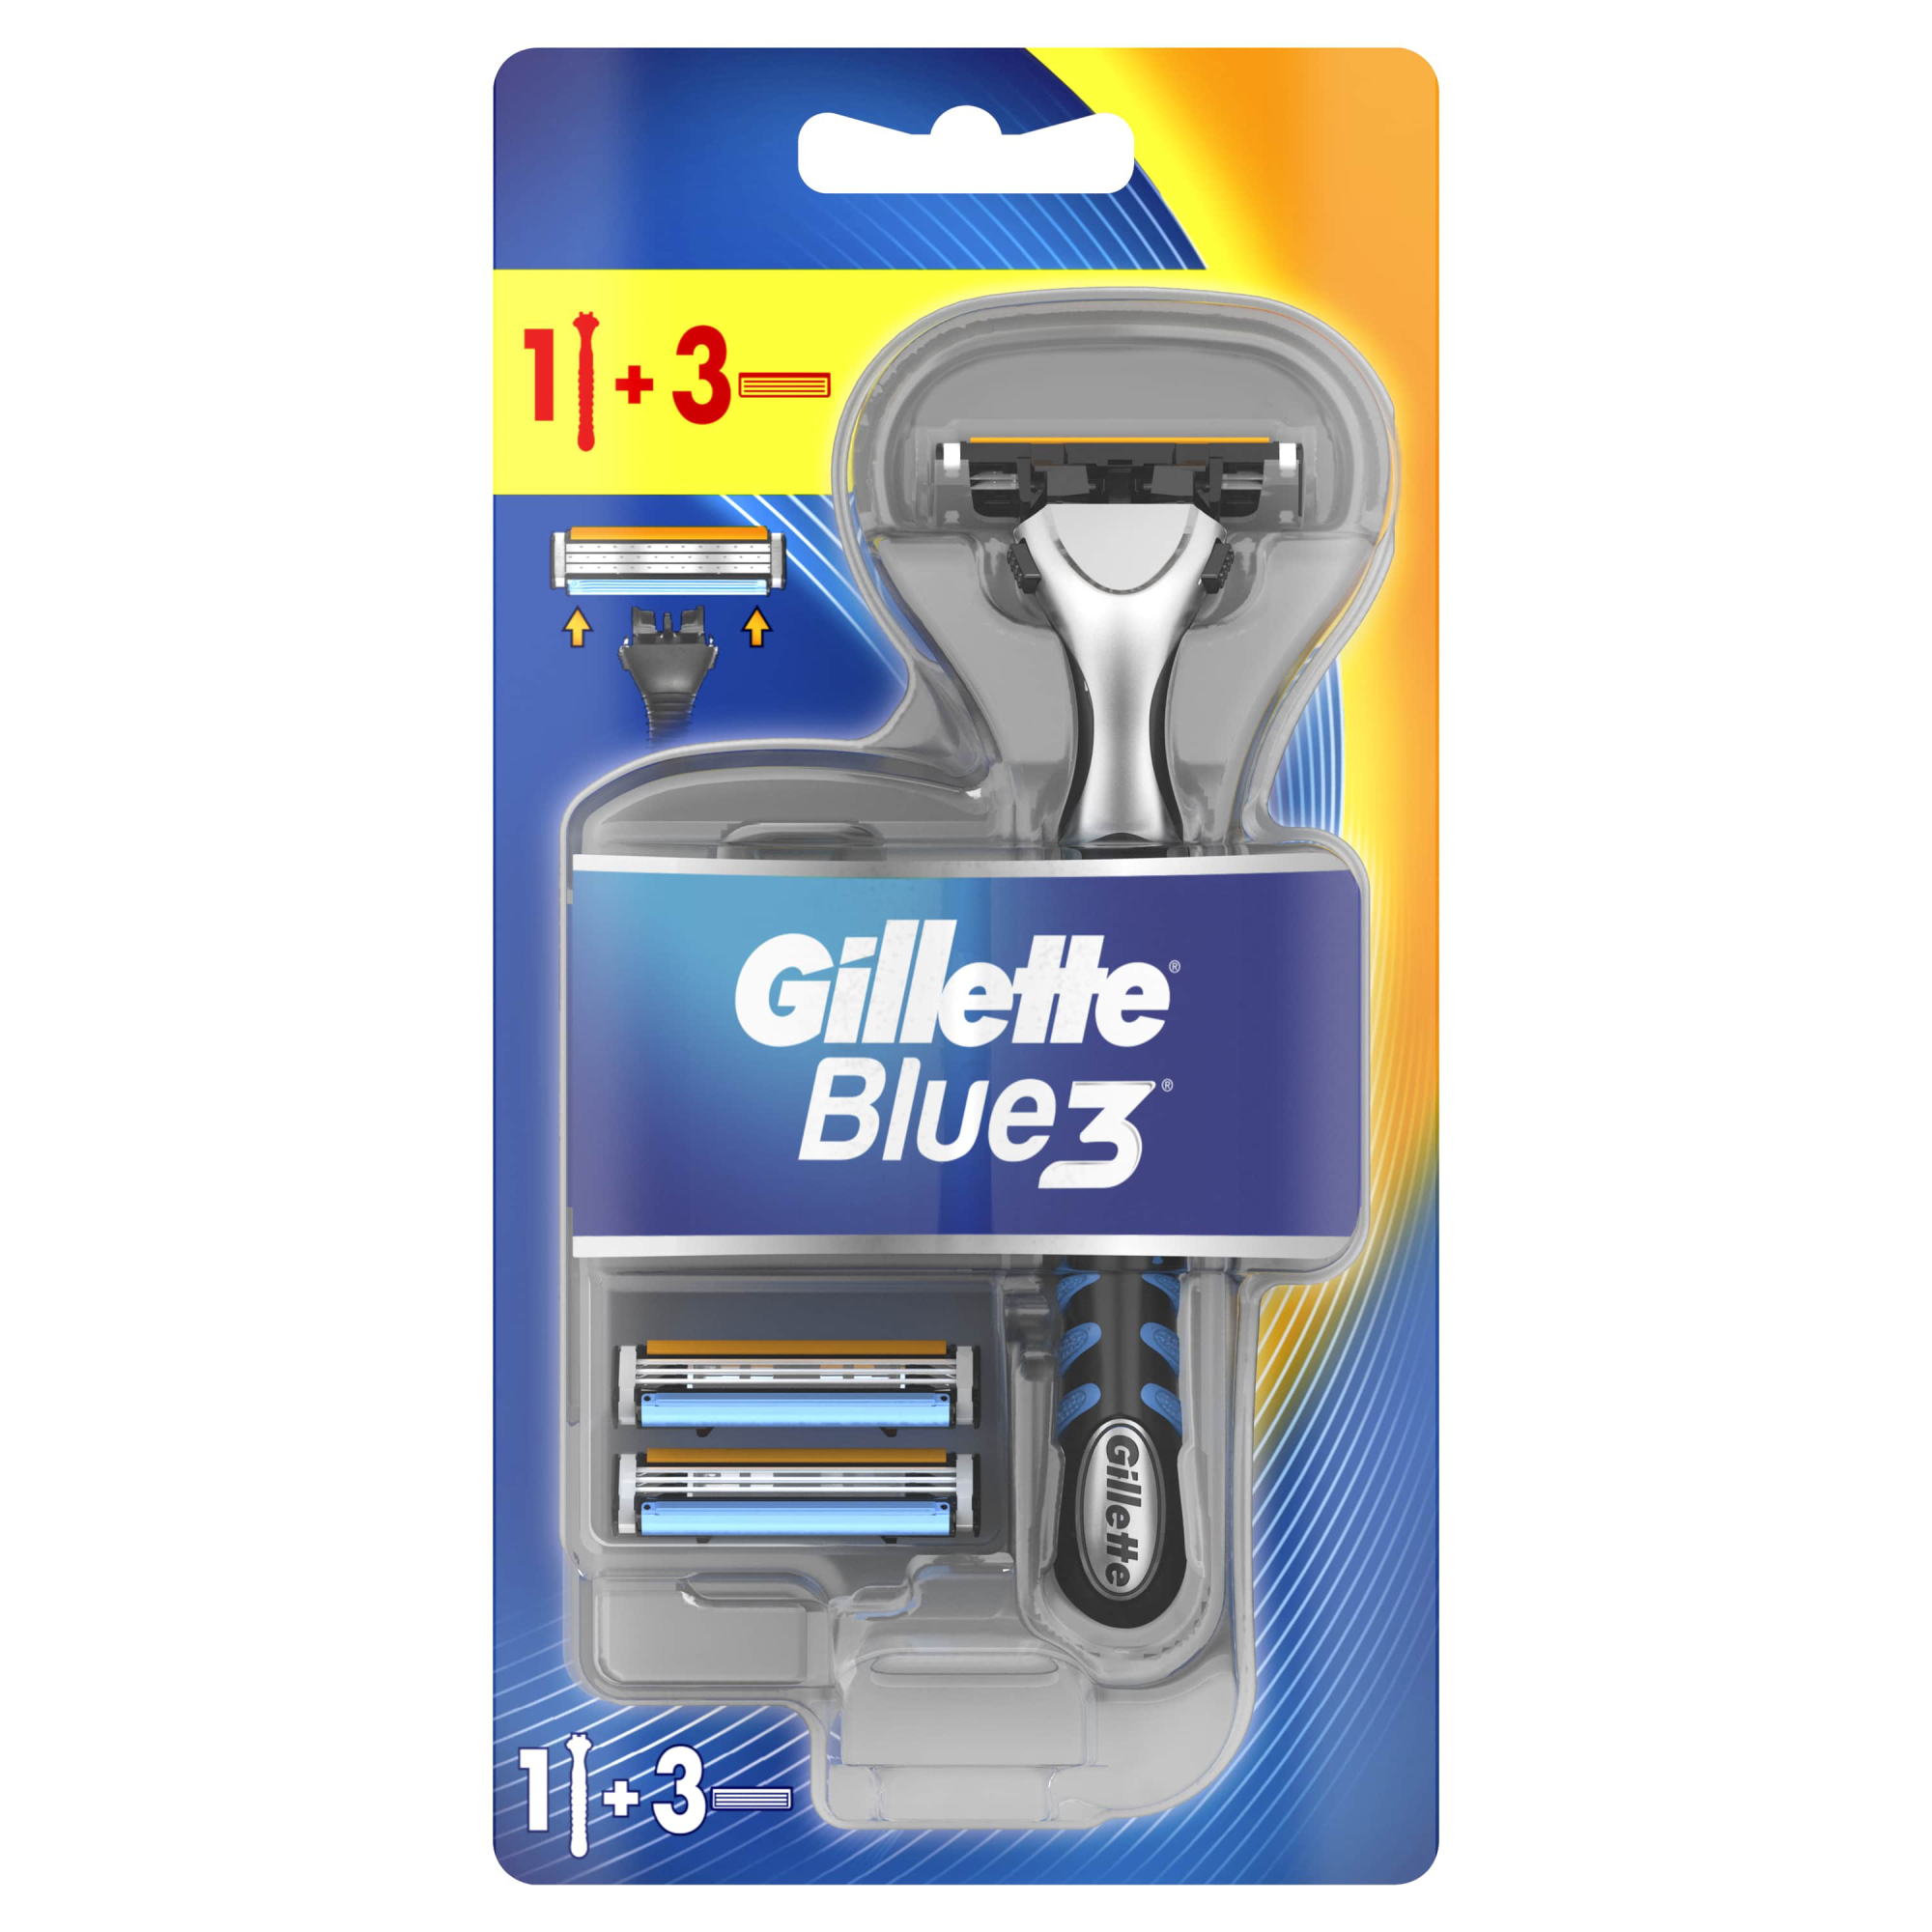 Мужская бритва Gillette Blue3, 3 кассеты, с 3 лезвиями, плавающая головка бритва бердск 2364а